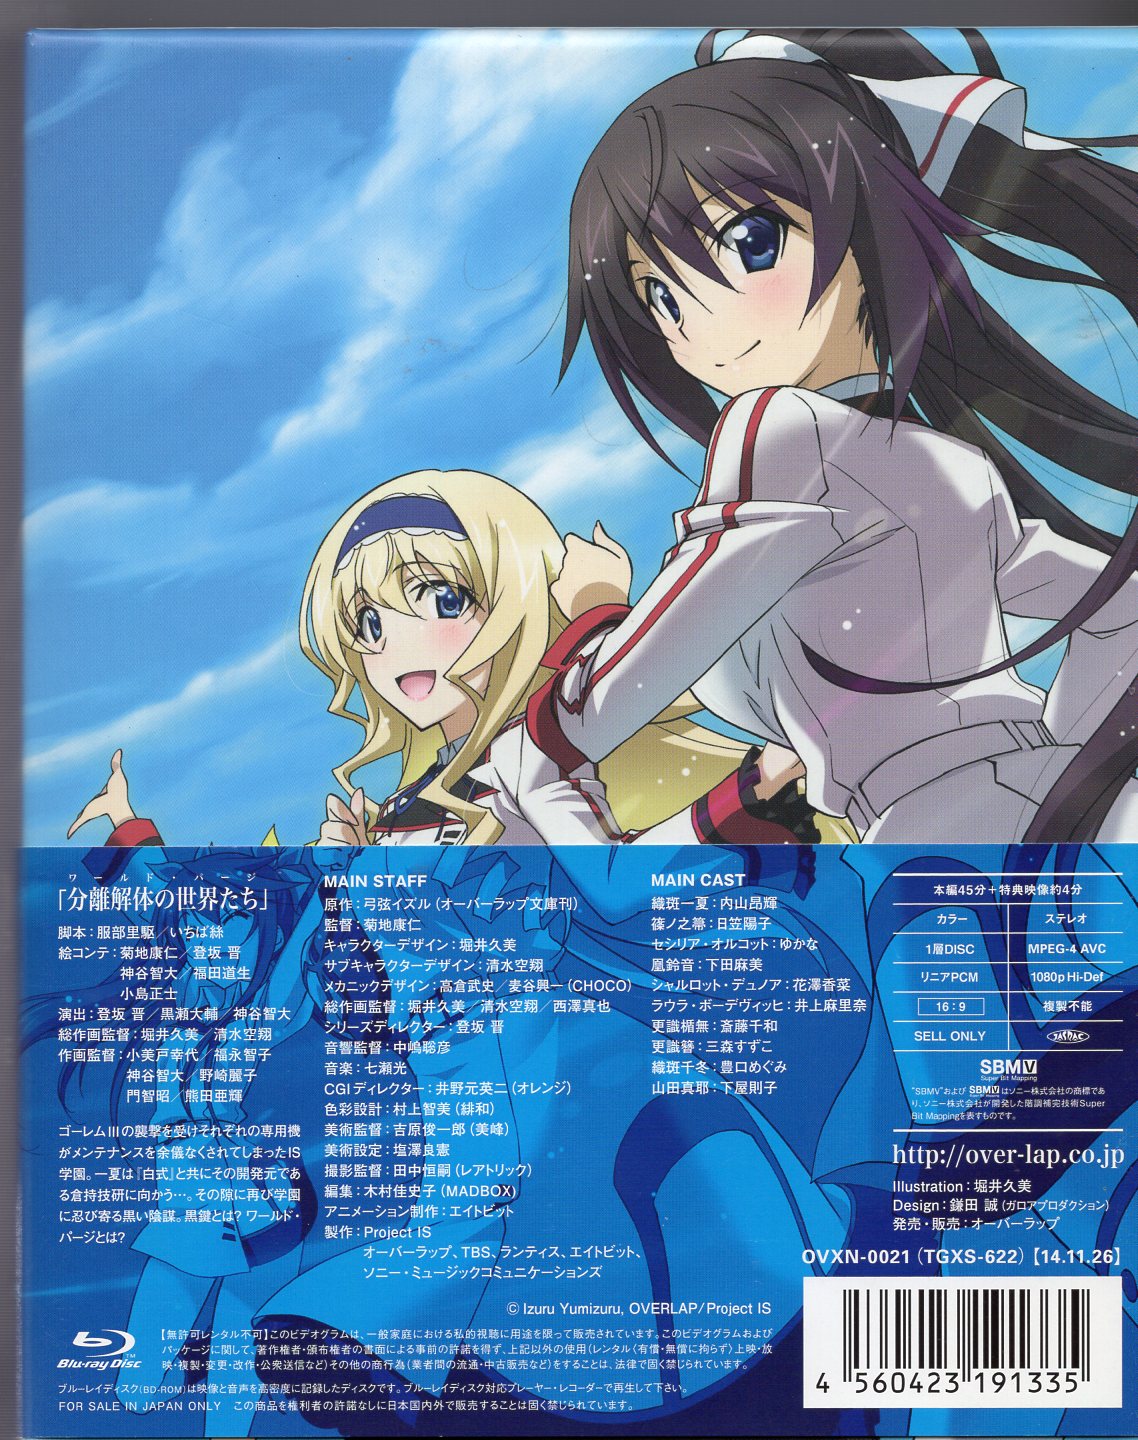 IS Infinite Stratos 2 OVA World Purge Edition Blu-ray NEW from